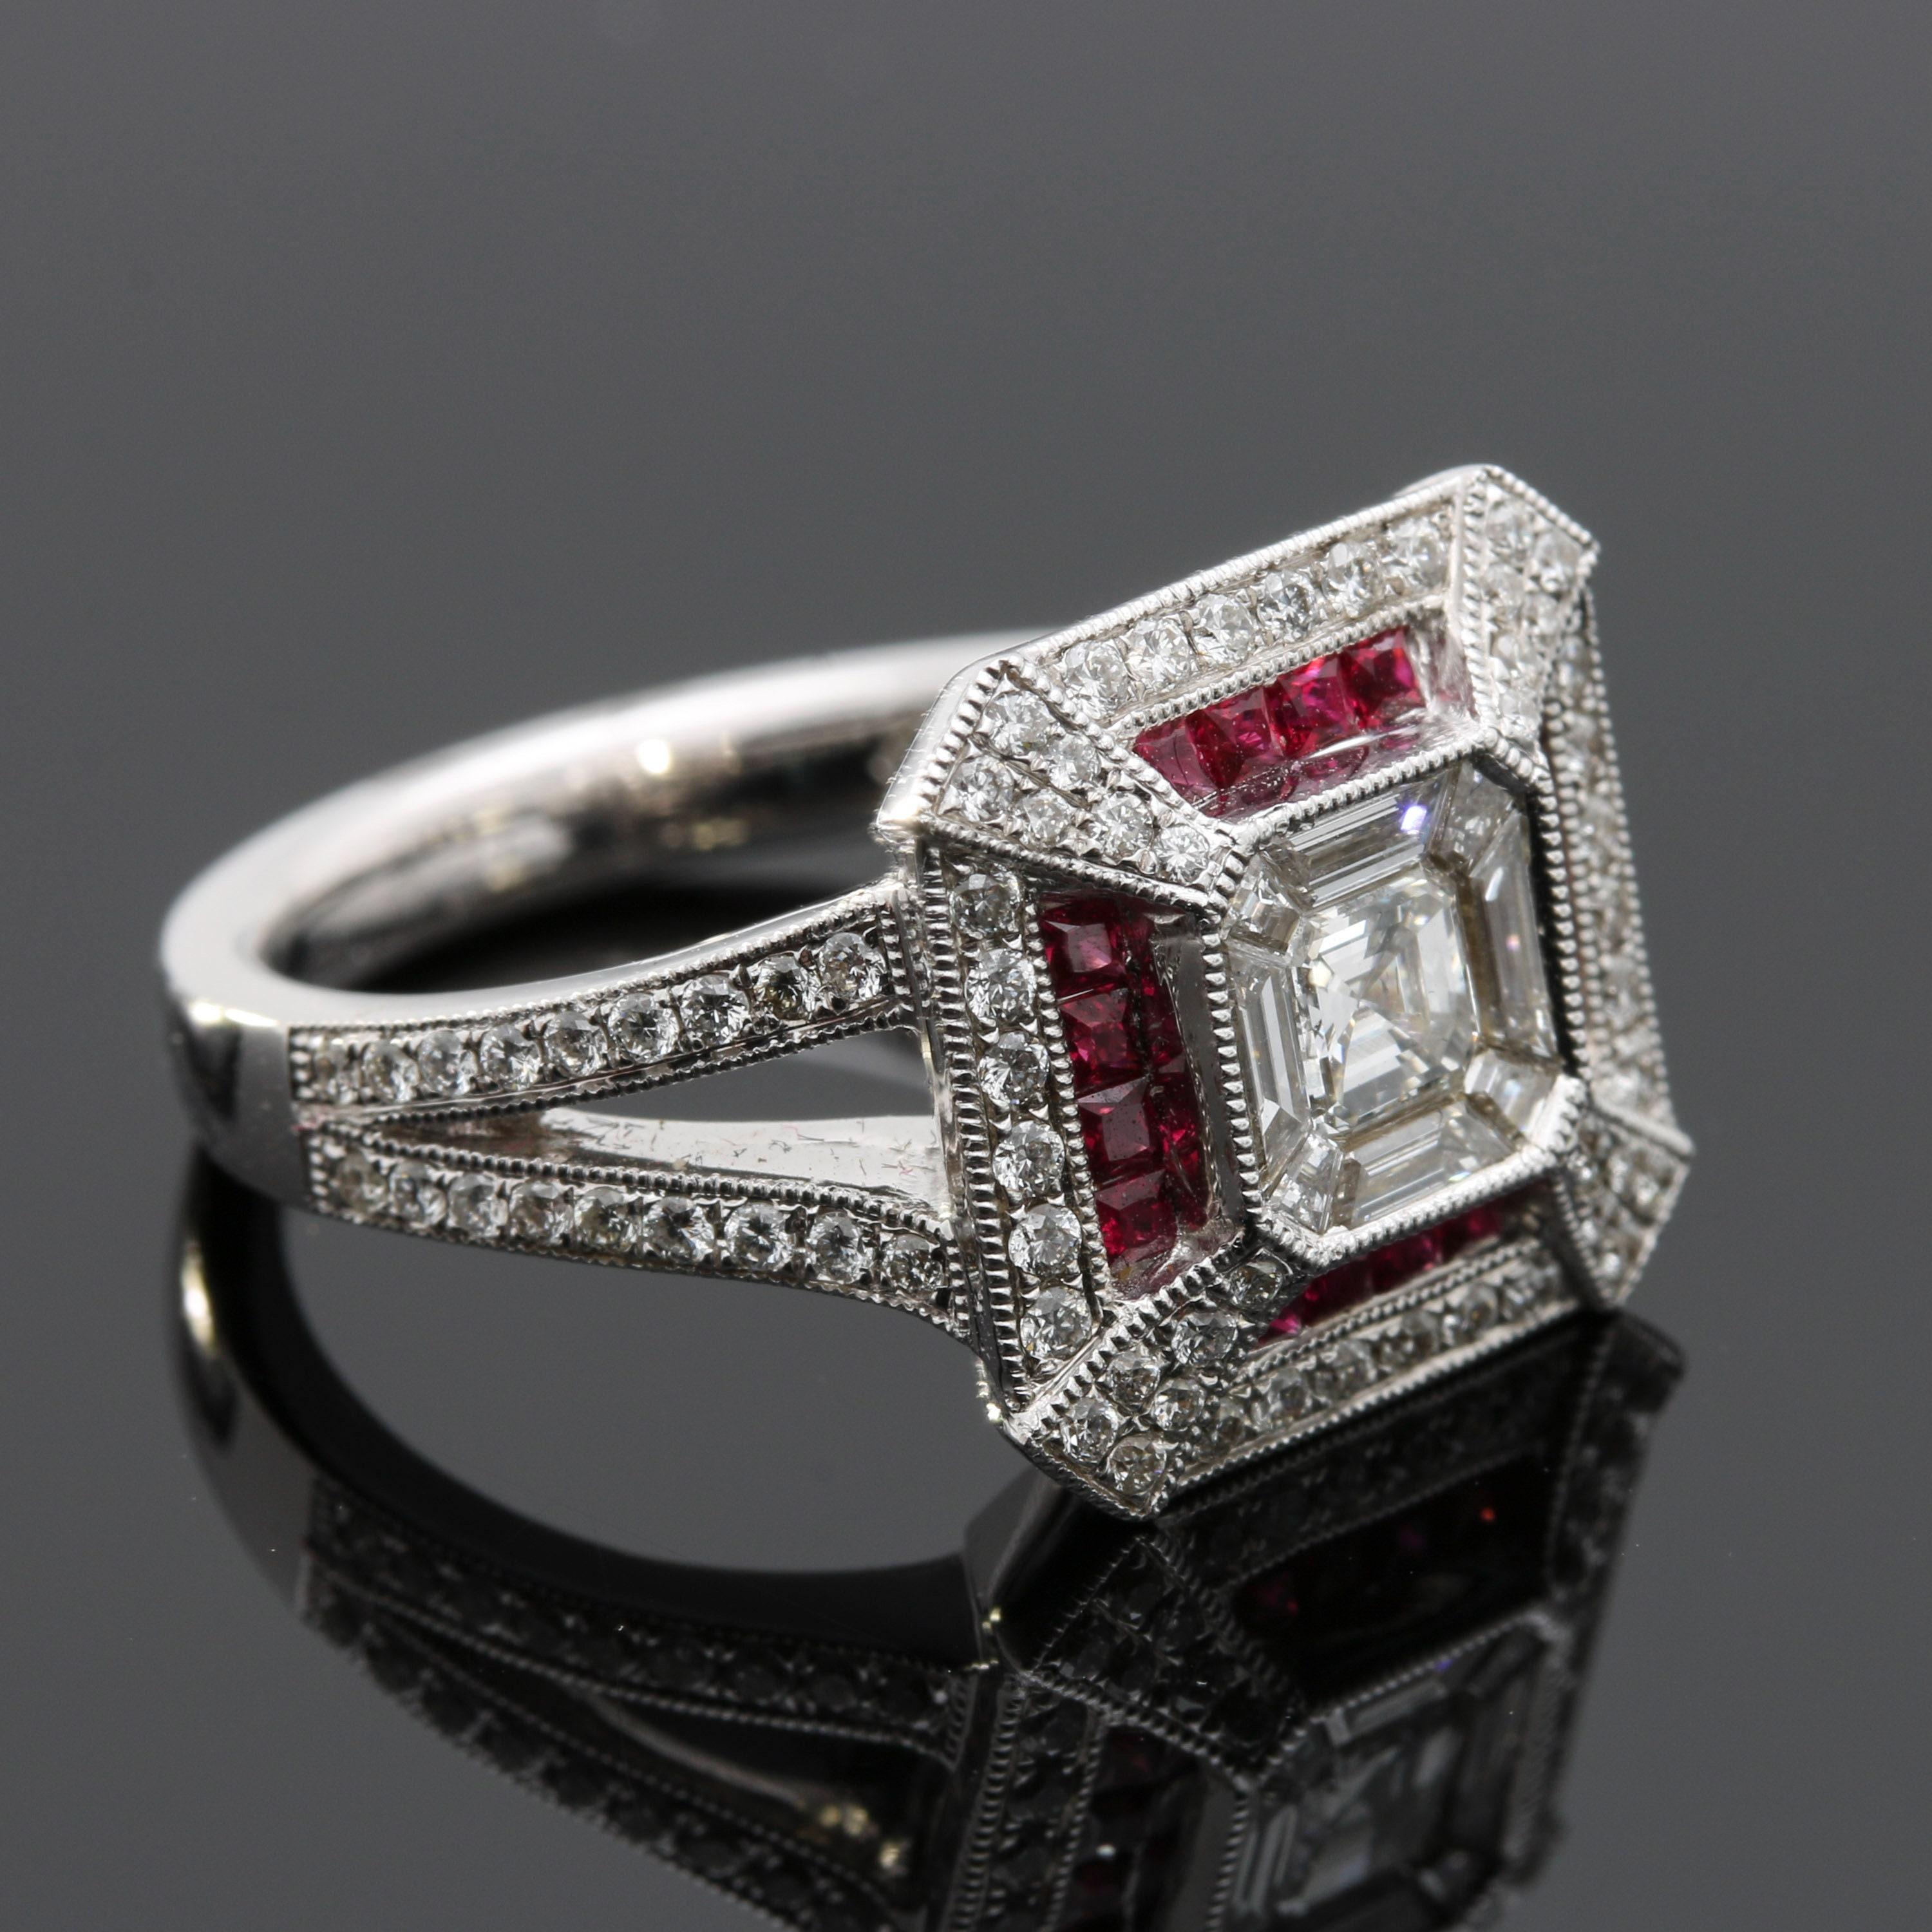 For Sale:  Art Deco Vintage Diamond Engagement Ring Antique Diamond White Gold Fashion Ring 2